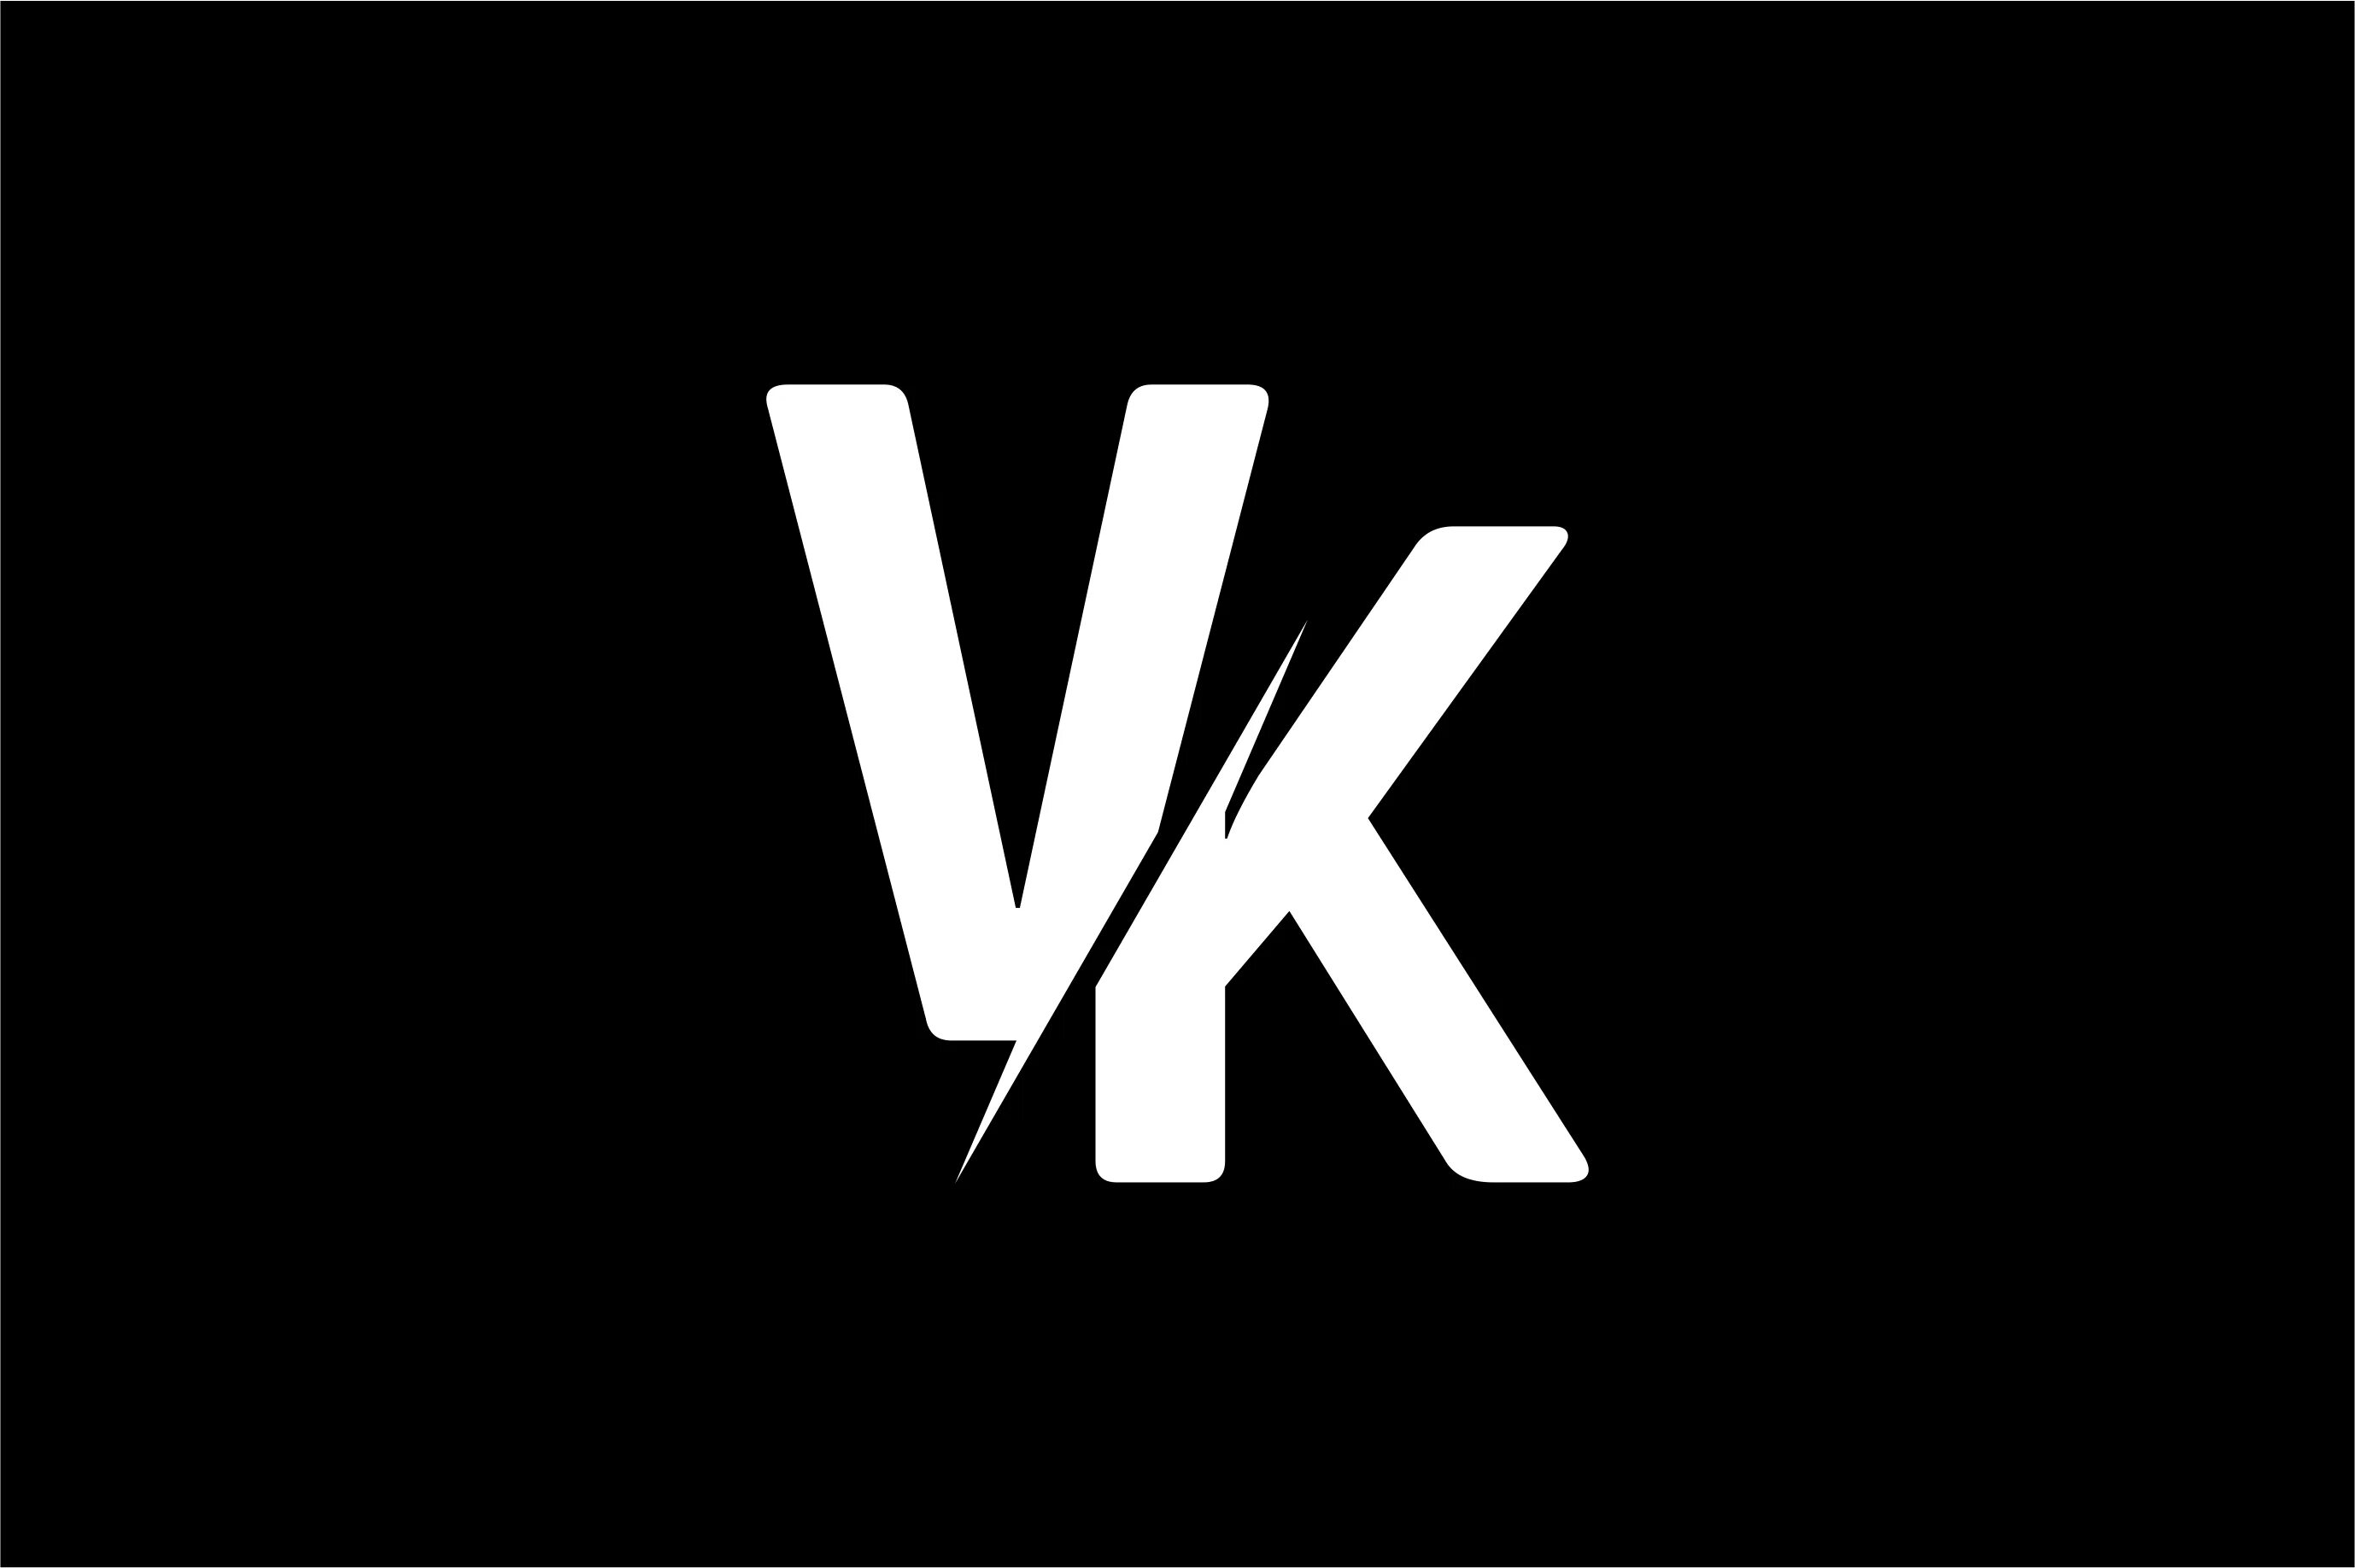 Логотип ВК. Логотип ВК чб. Логотип ВК на черном фоне. Логотип v. Логотип вк черный